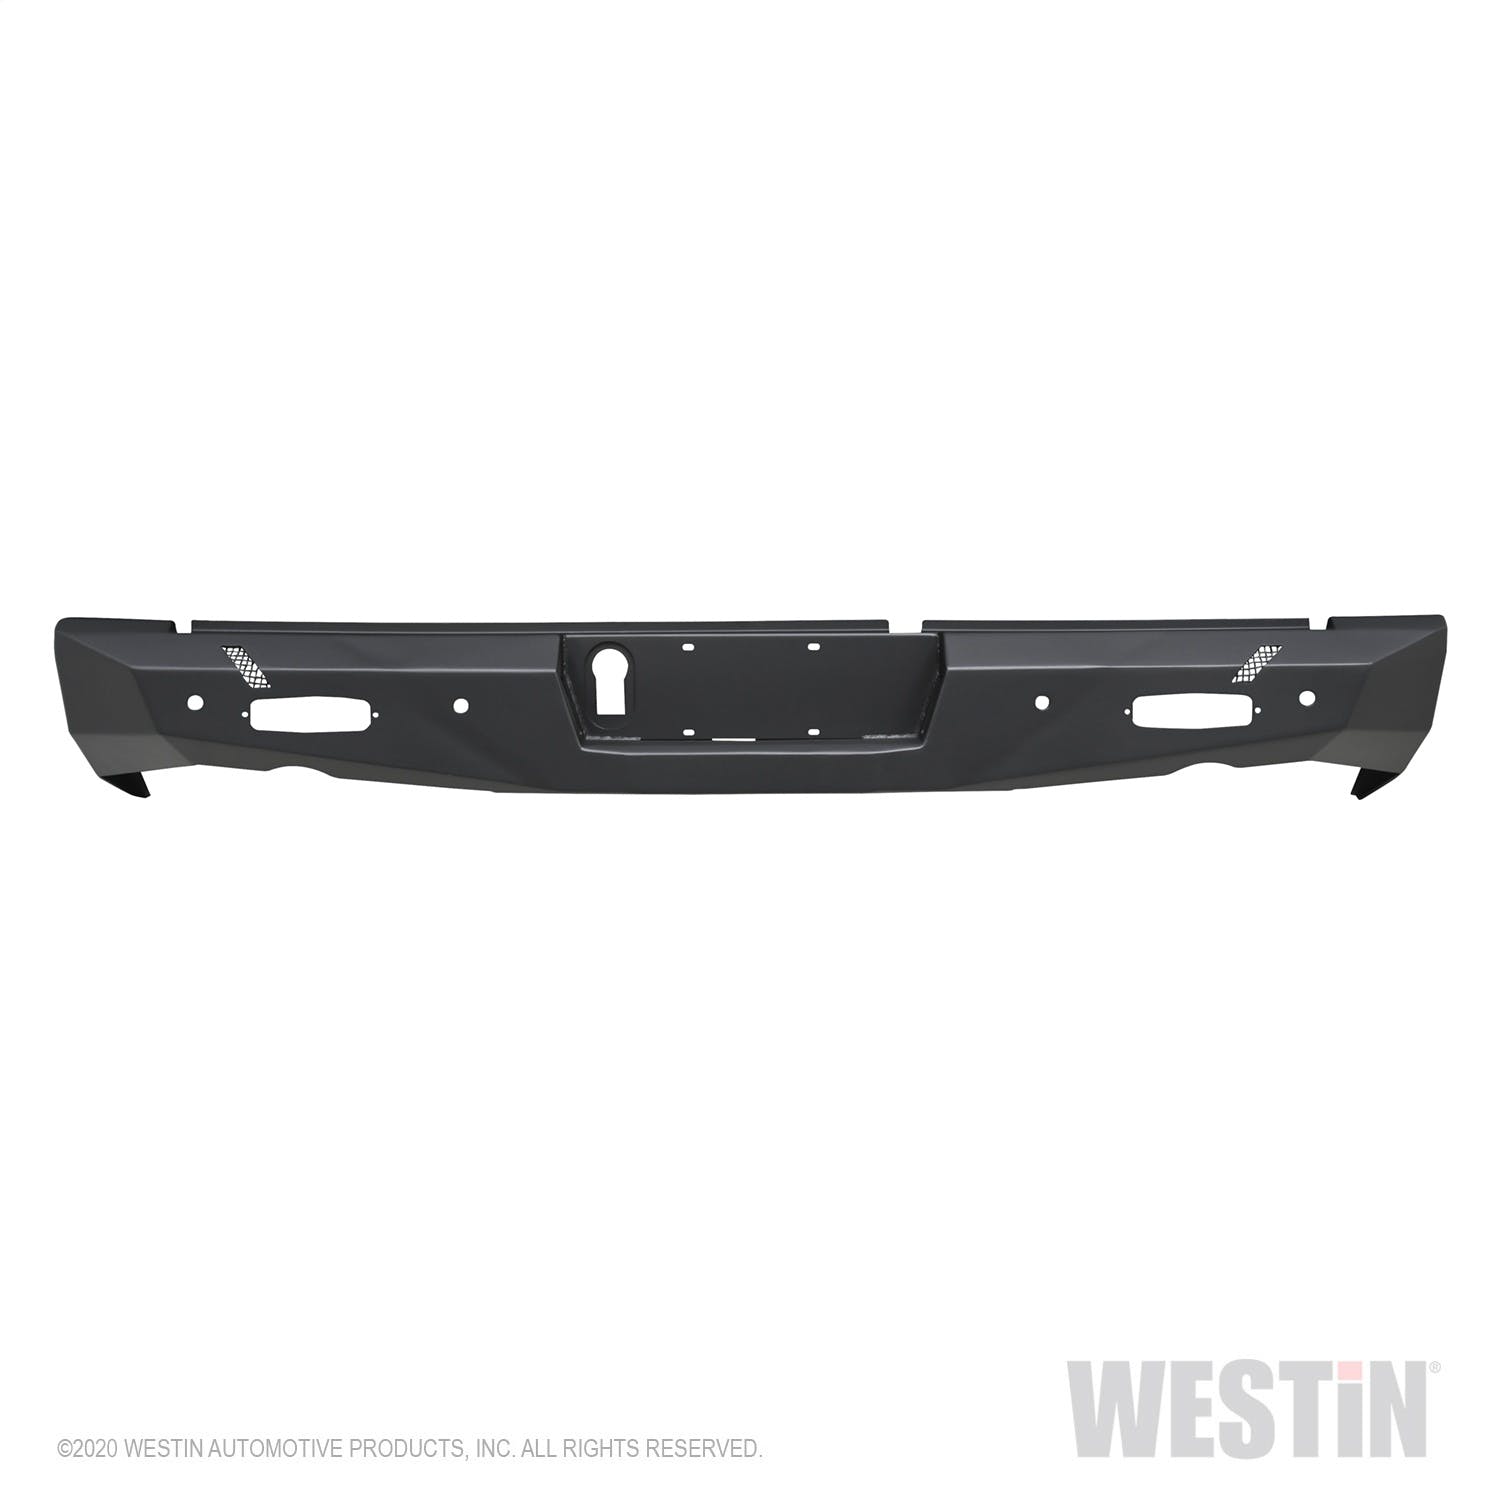 Westin Automotive 58-421025 Pro-Series Rear Bumper, Textured Black